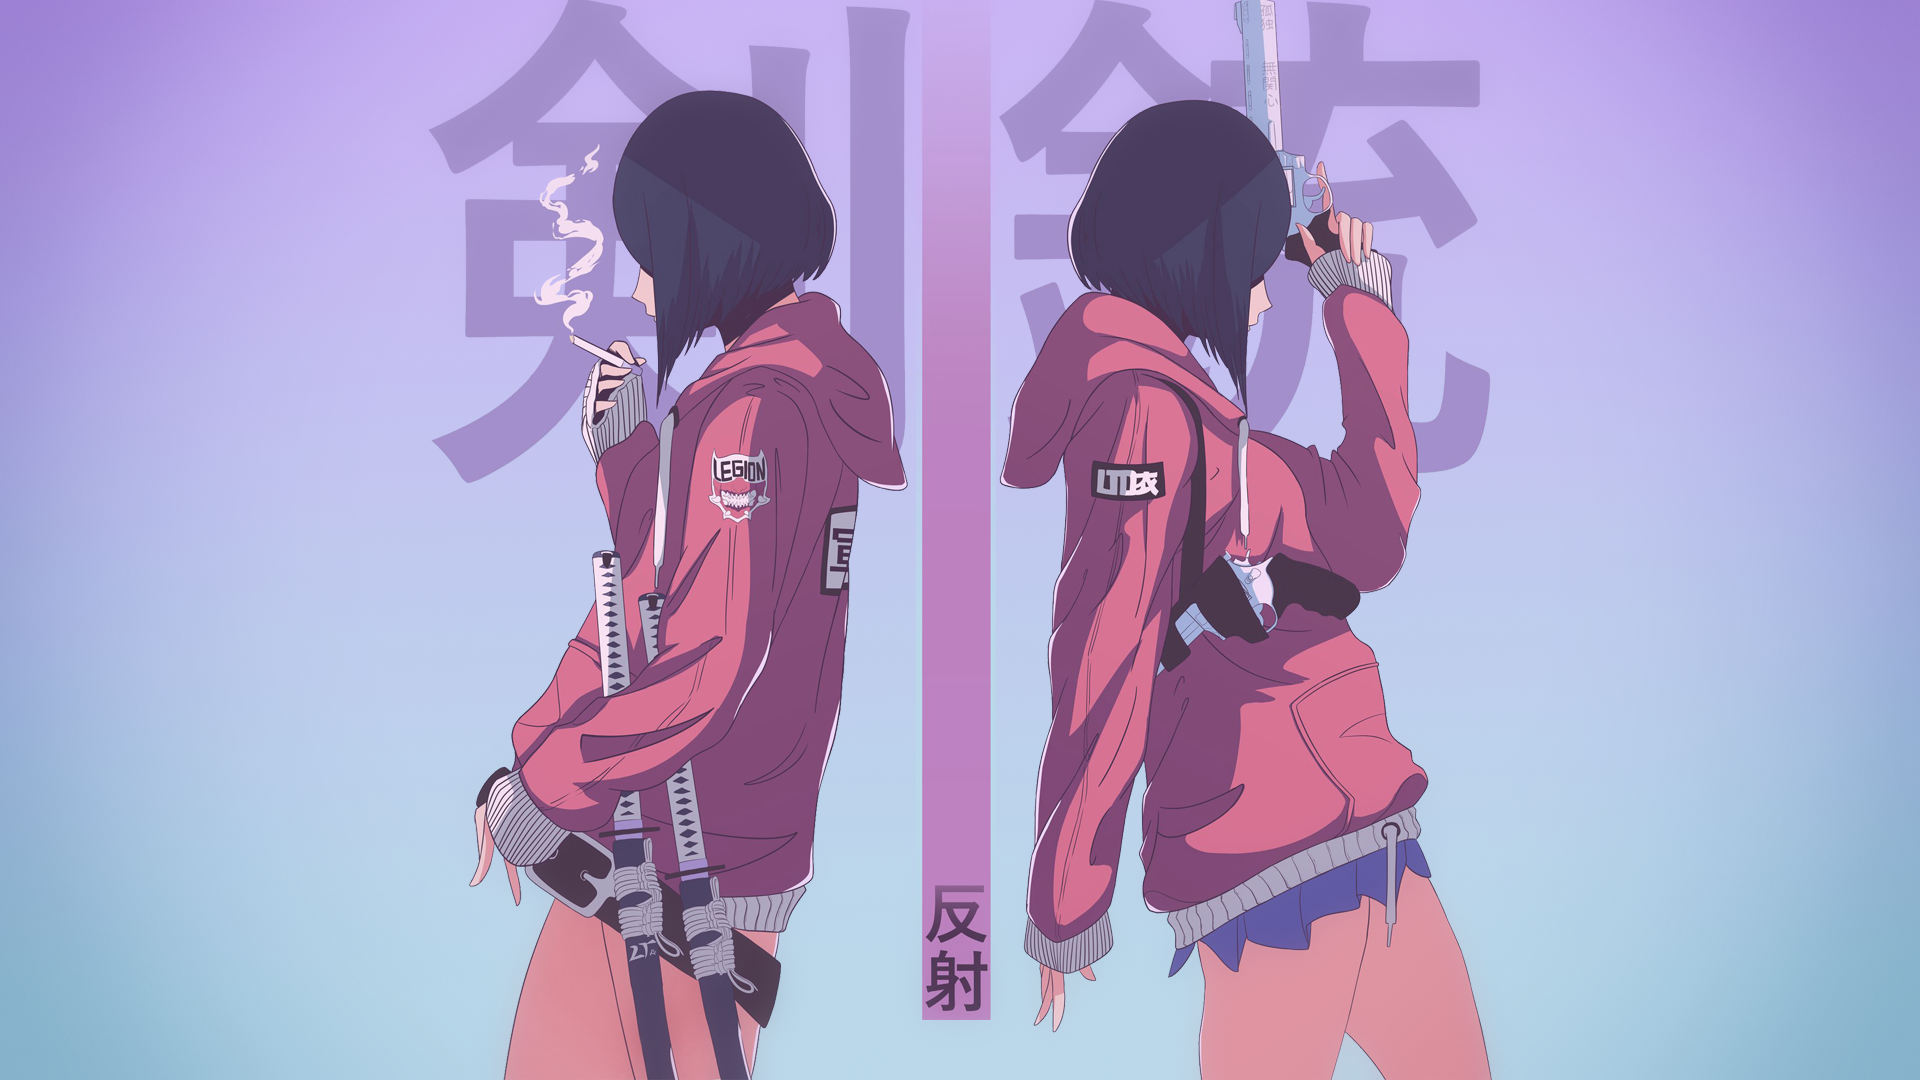 Anime 1920x1080 anime anime girls illustration fan art minimalism texture katana revolver Japanese Art logo futuristic smoke